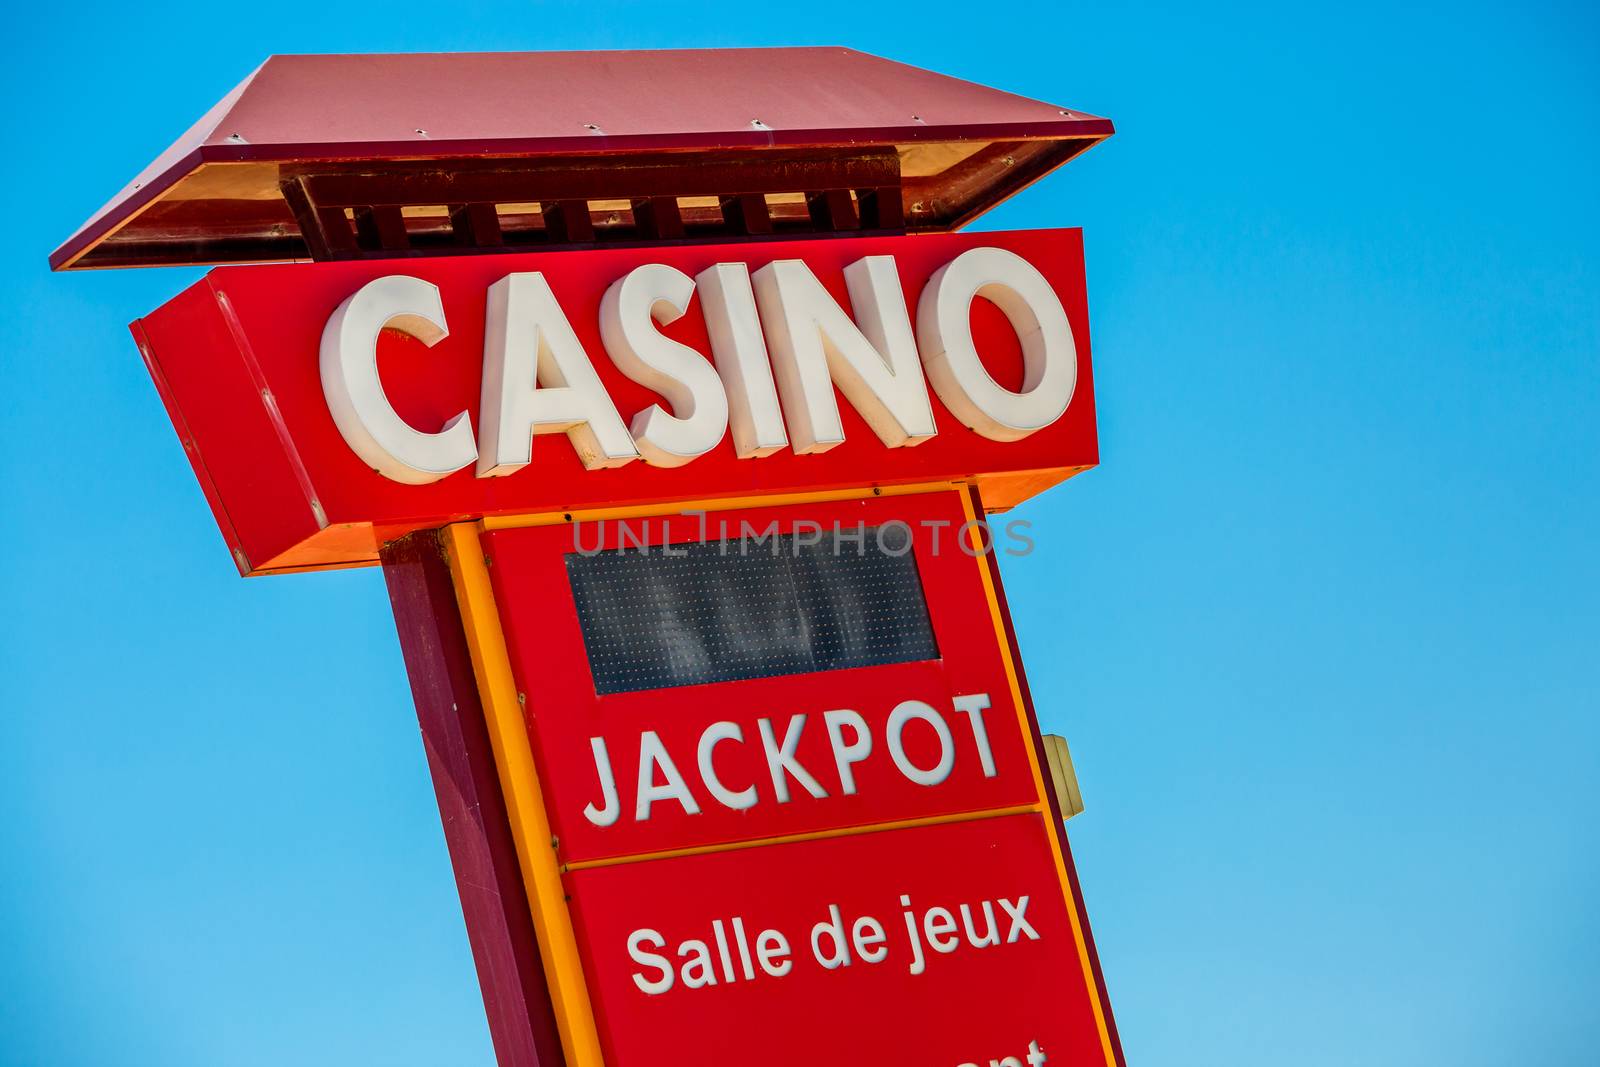 Casino sign on blue sky background by pixinoo